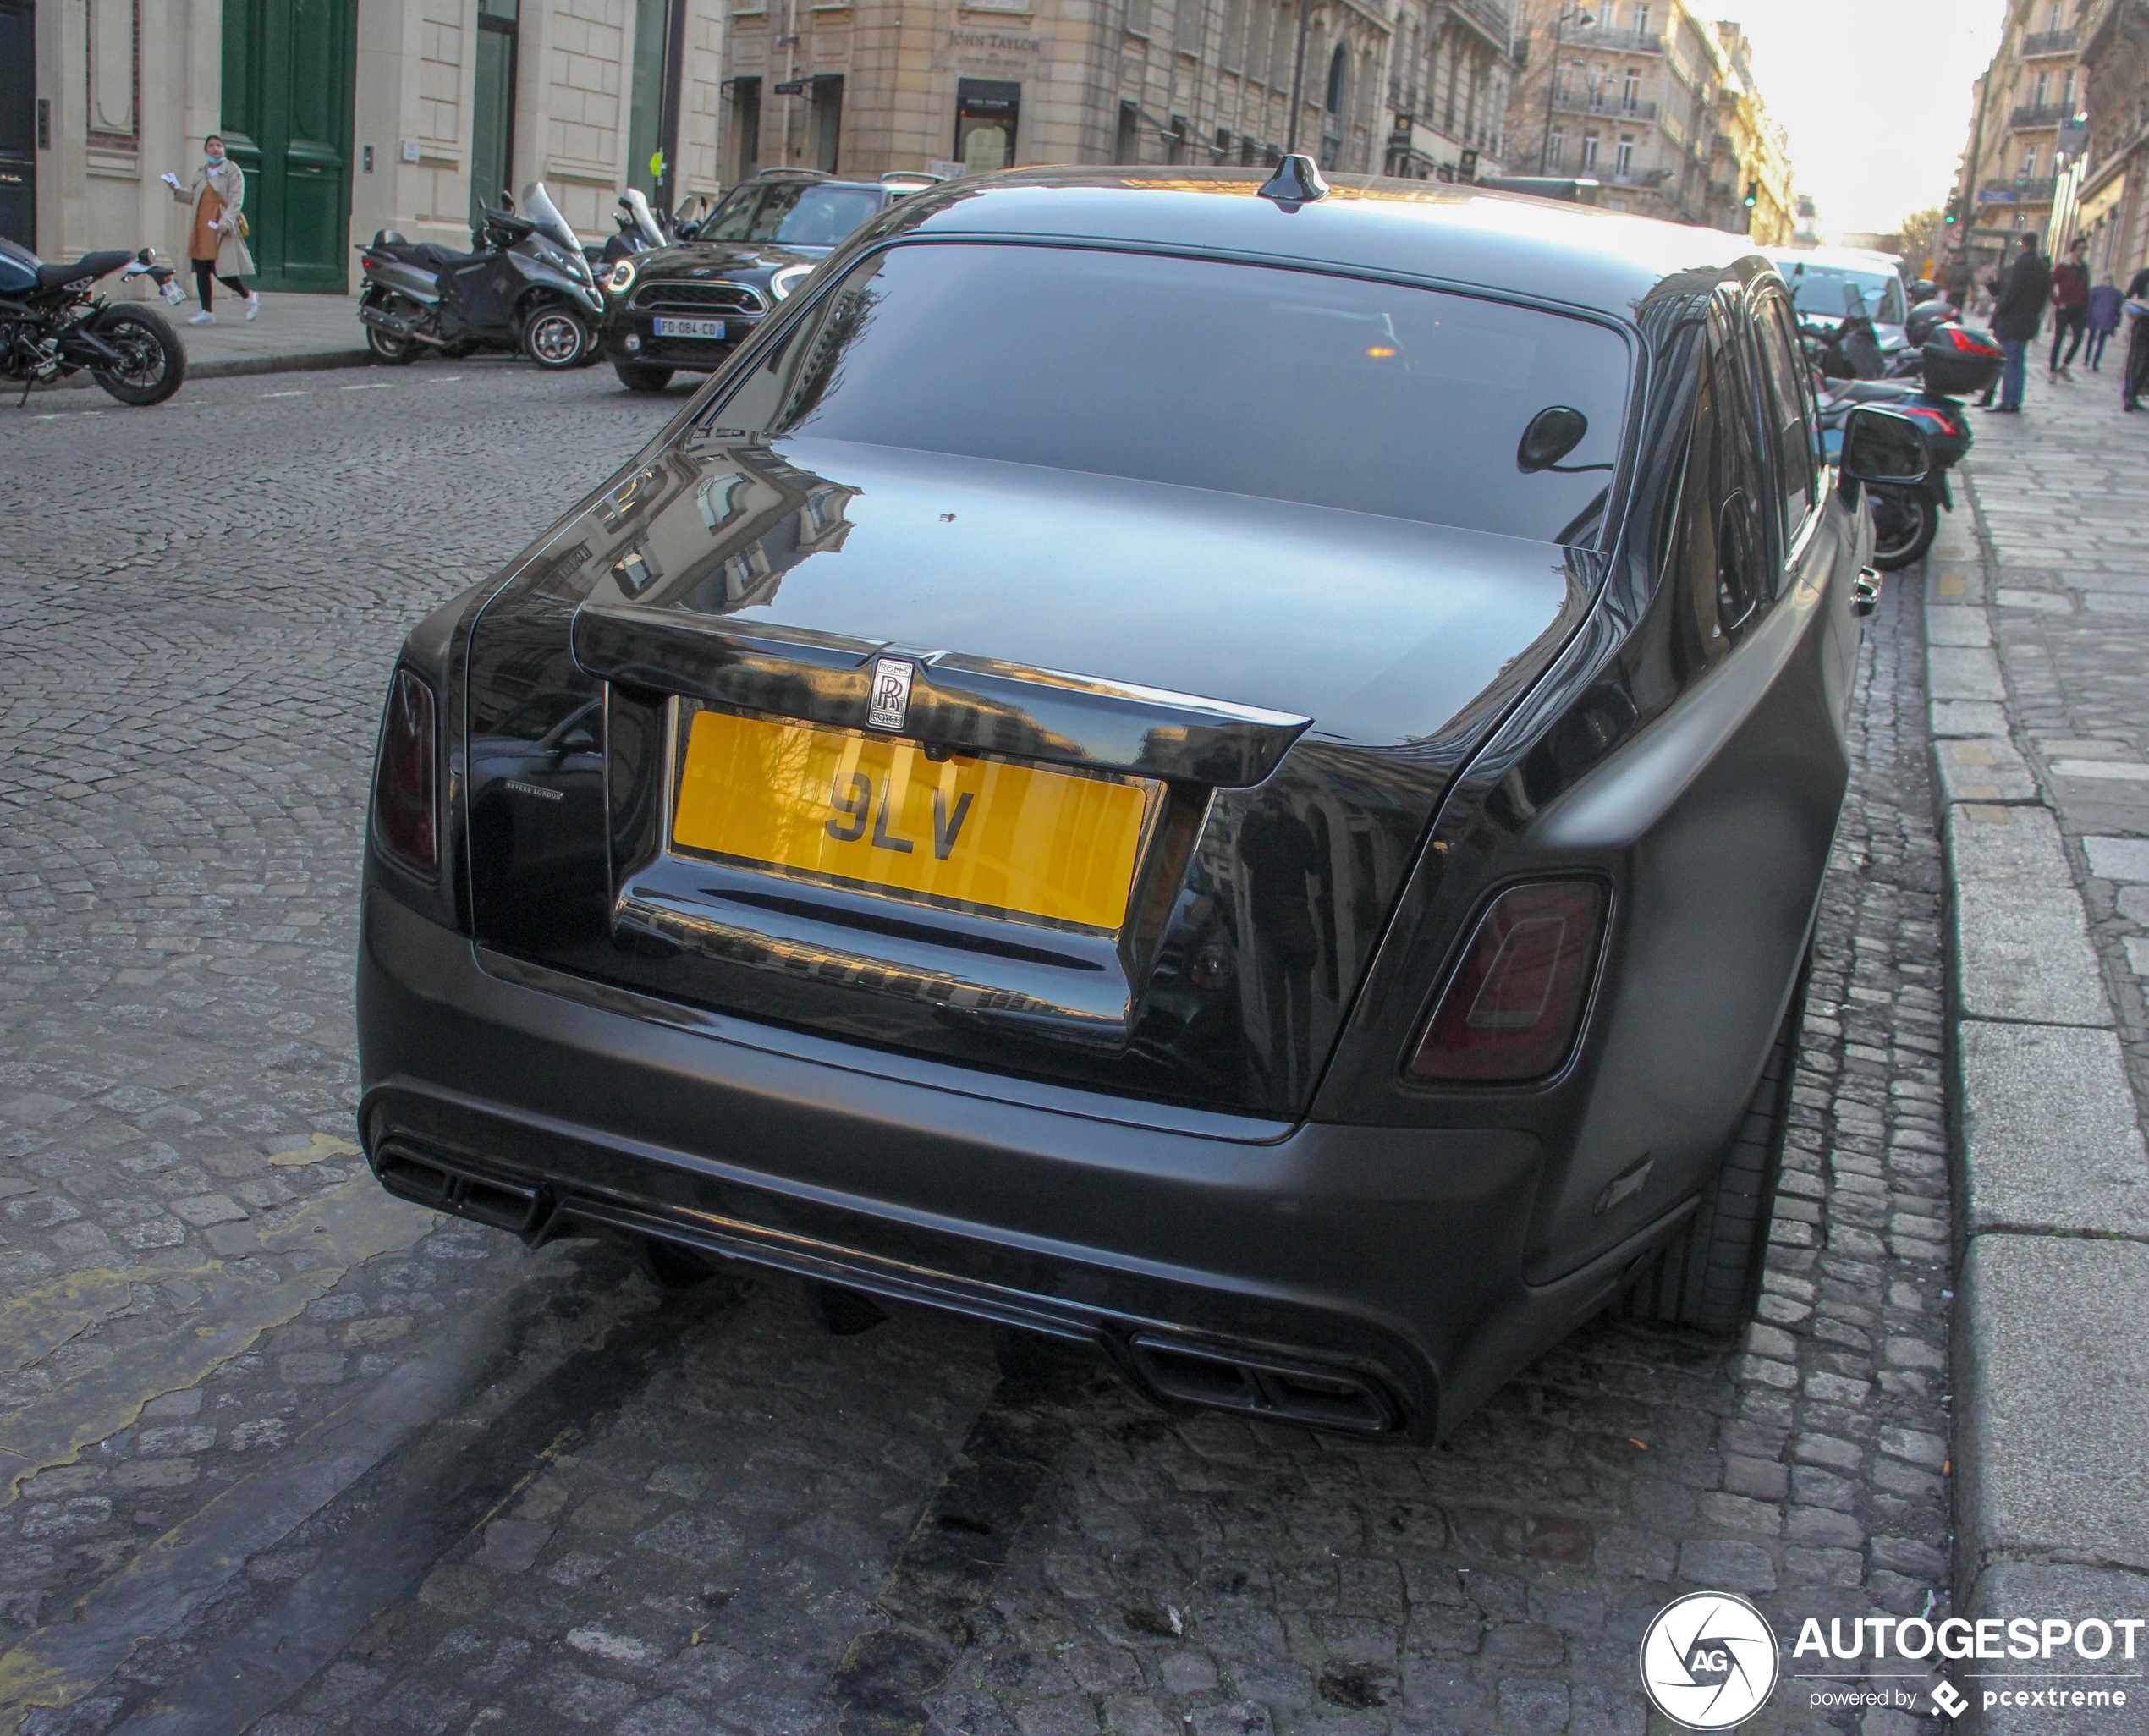 Rolls Royce Phantom - Revere London, rolls royce phantom